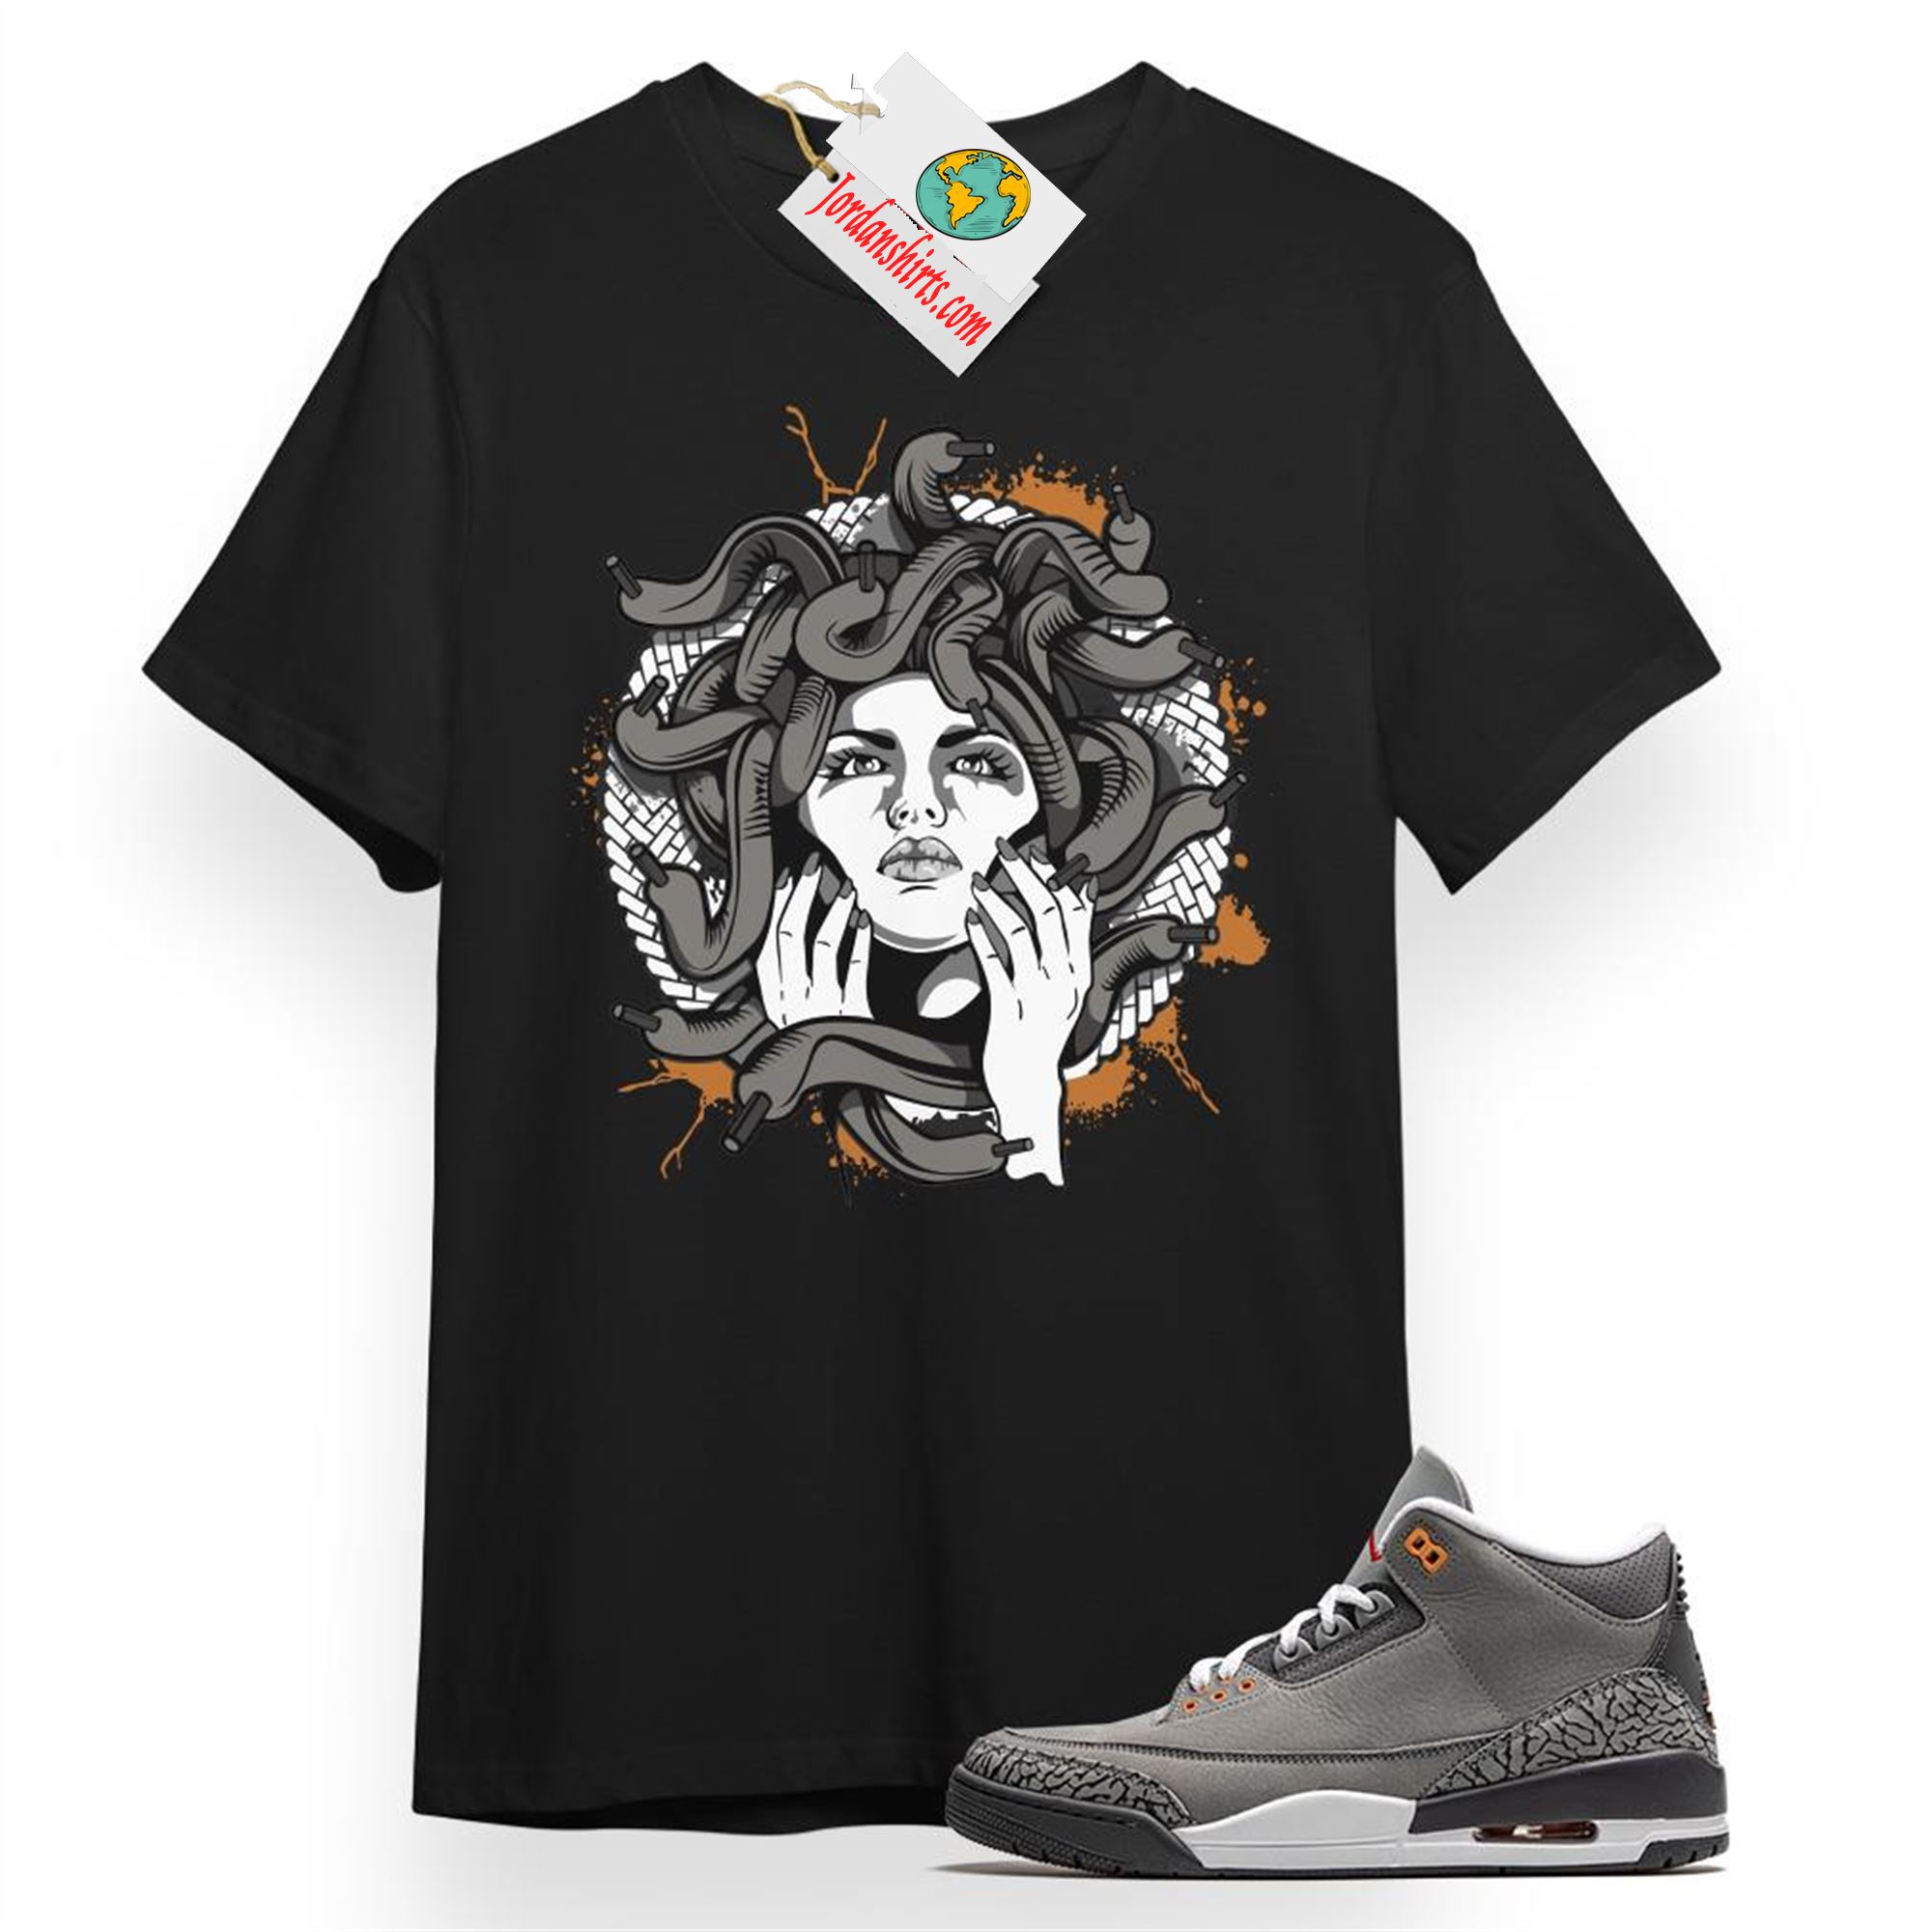 Jordan 3 Shirt, Medusa Black T-shirt Air Jordan 3 Cool Grey 3s Full Size Up To 5xl